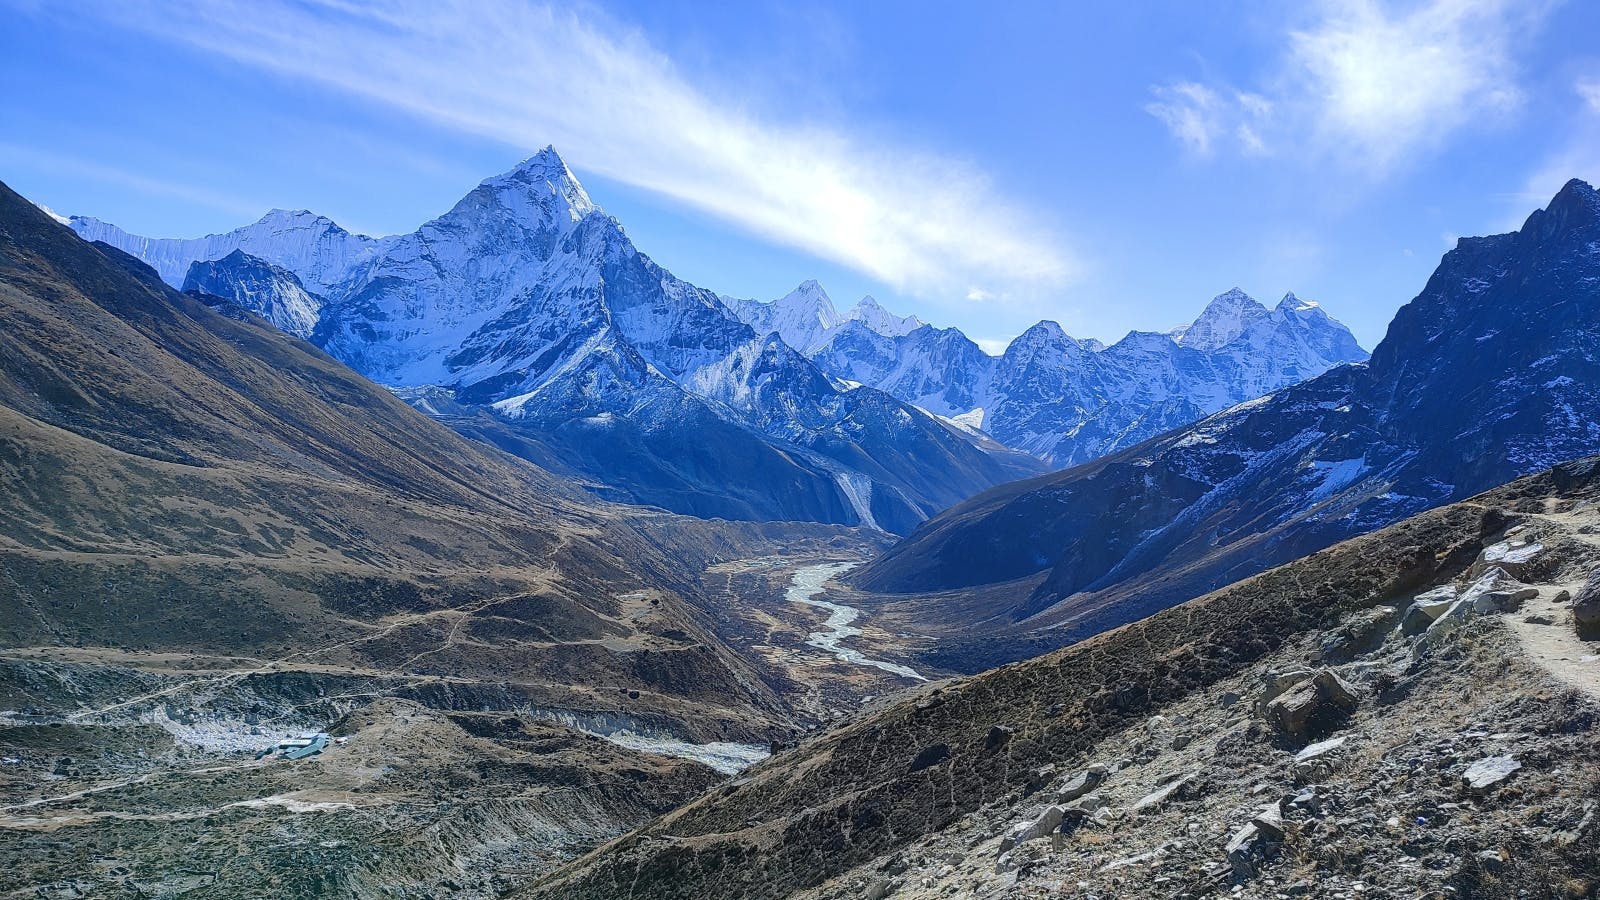 Tenzing Hillary Marathon: 70th Anniversary of First Mt Everest Summit